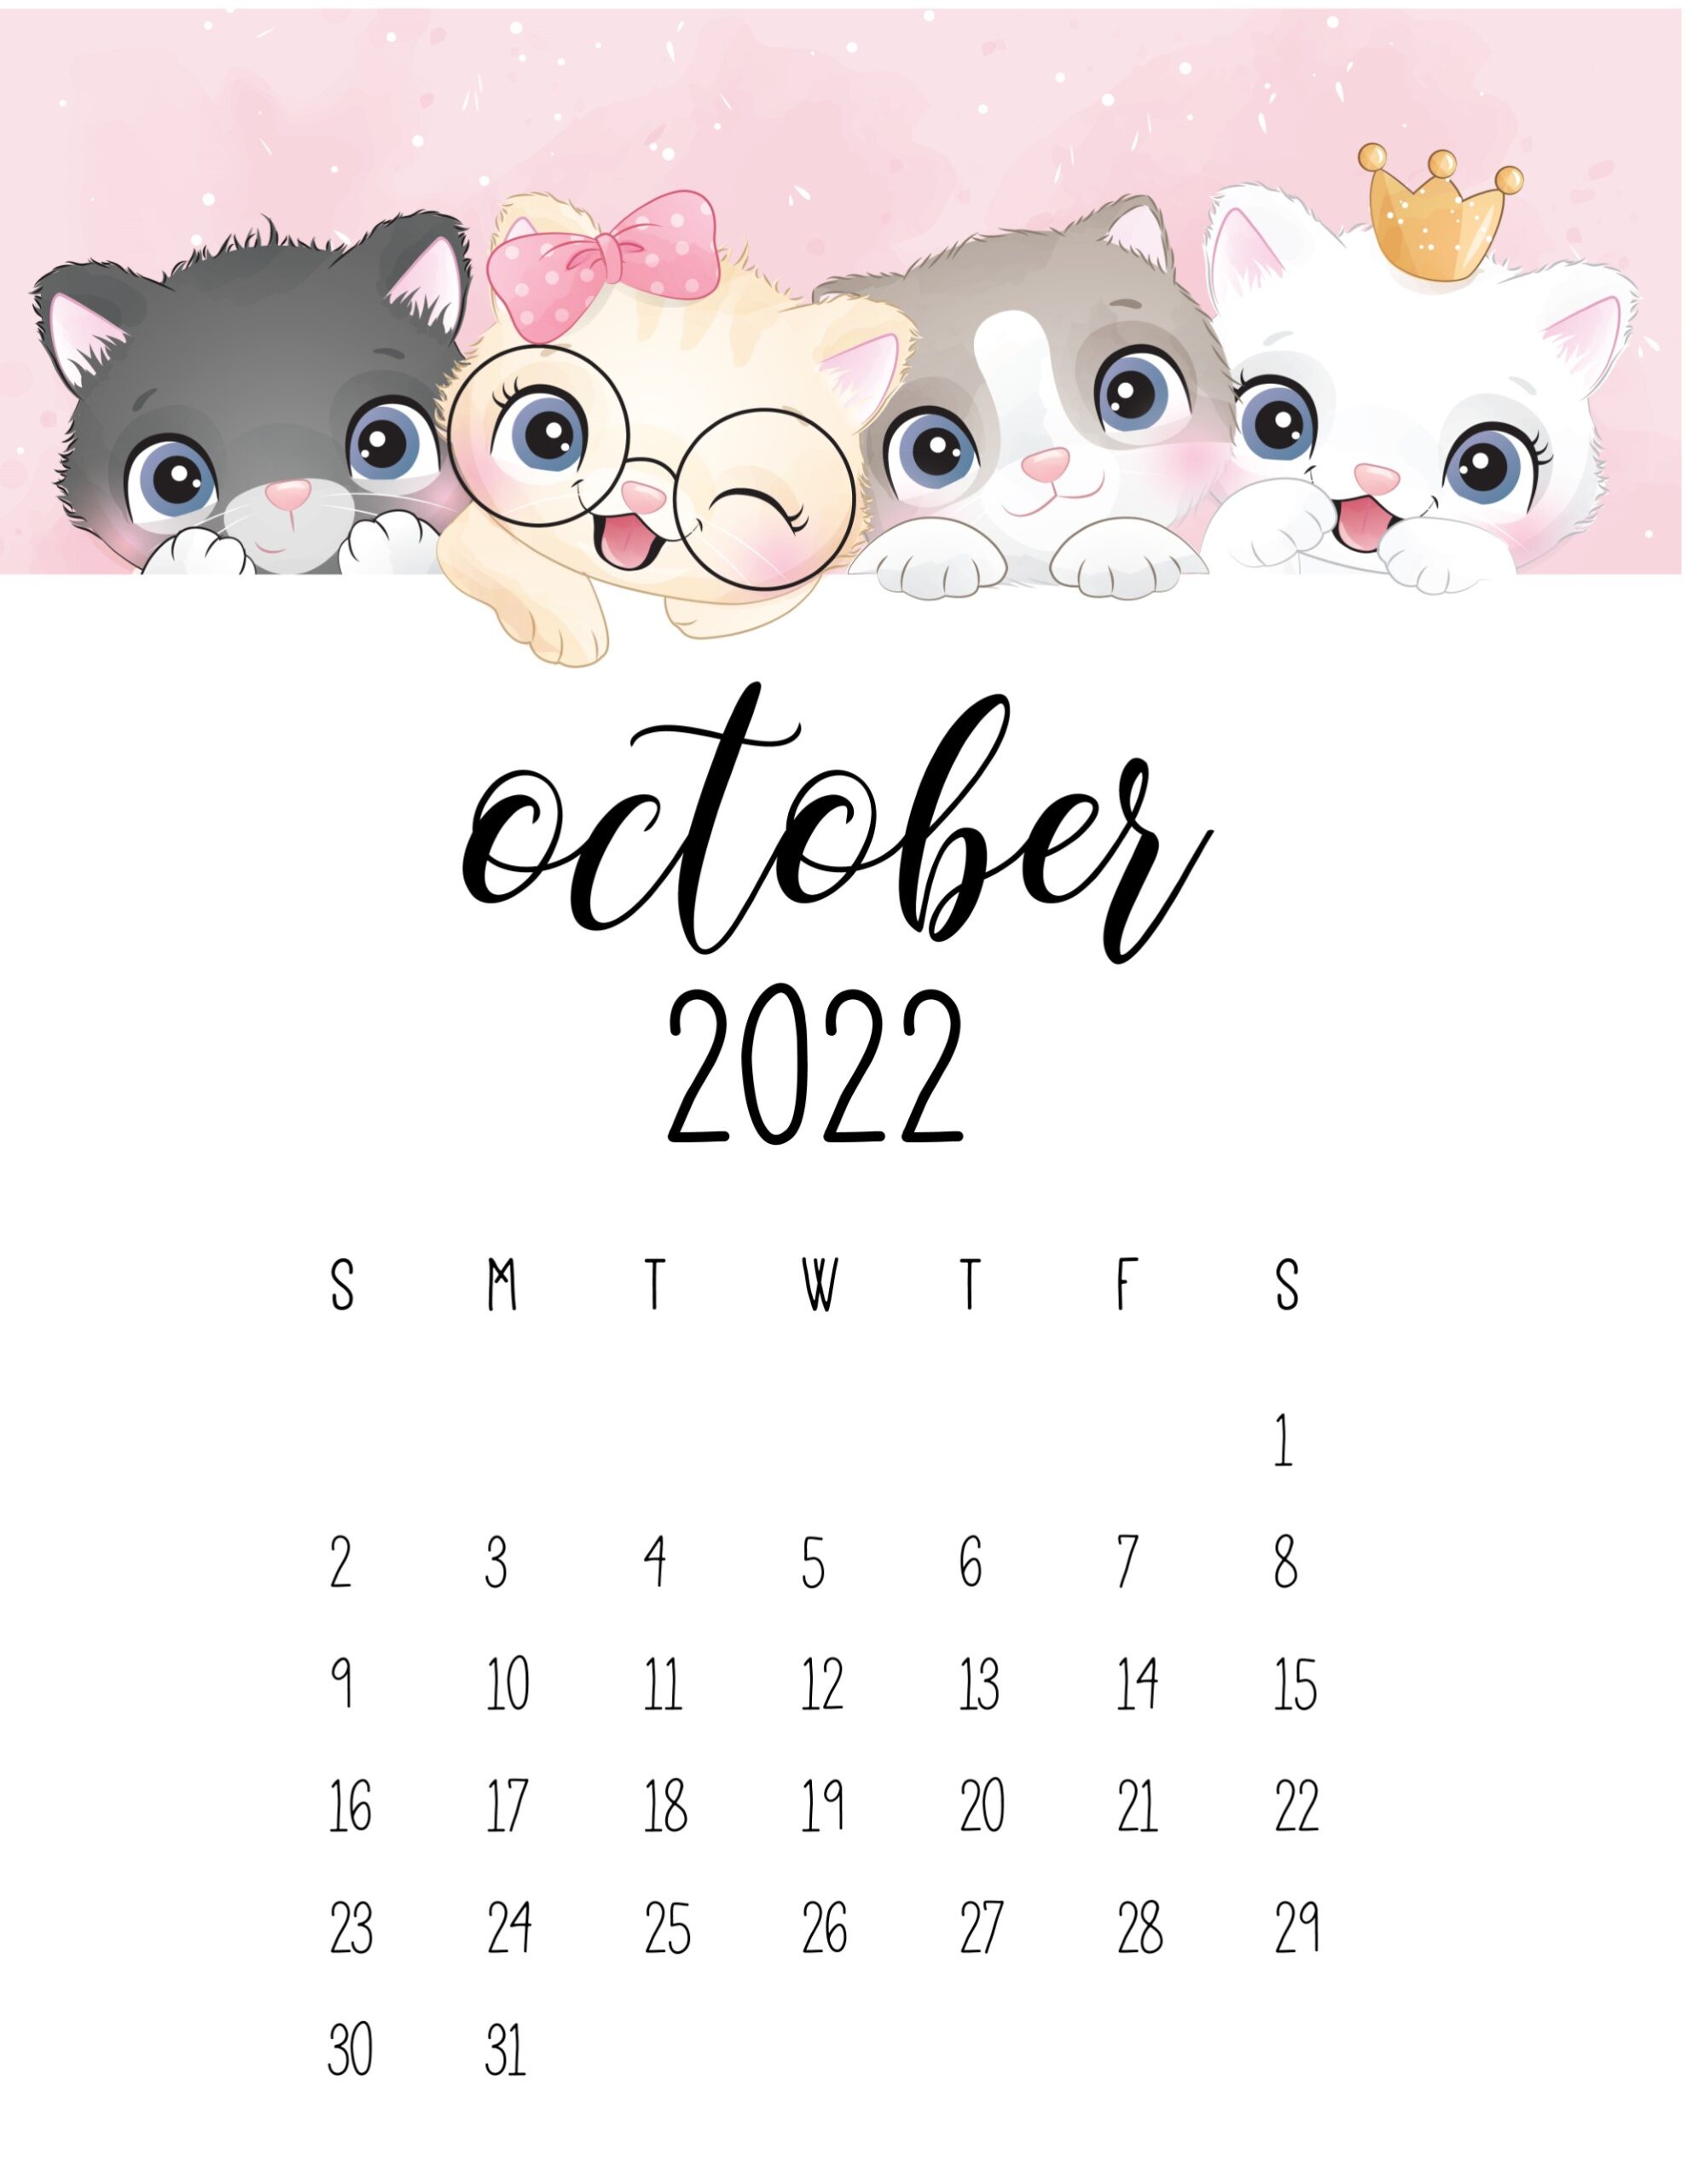 calendario 2022 gatinhos outubro 1